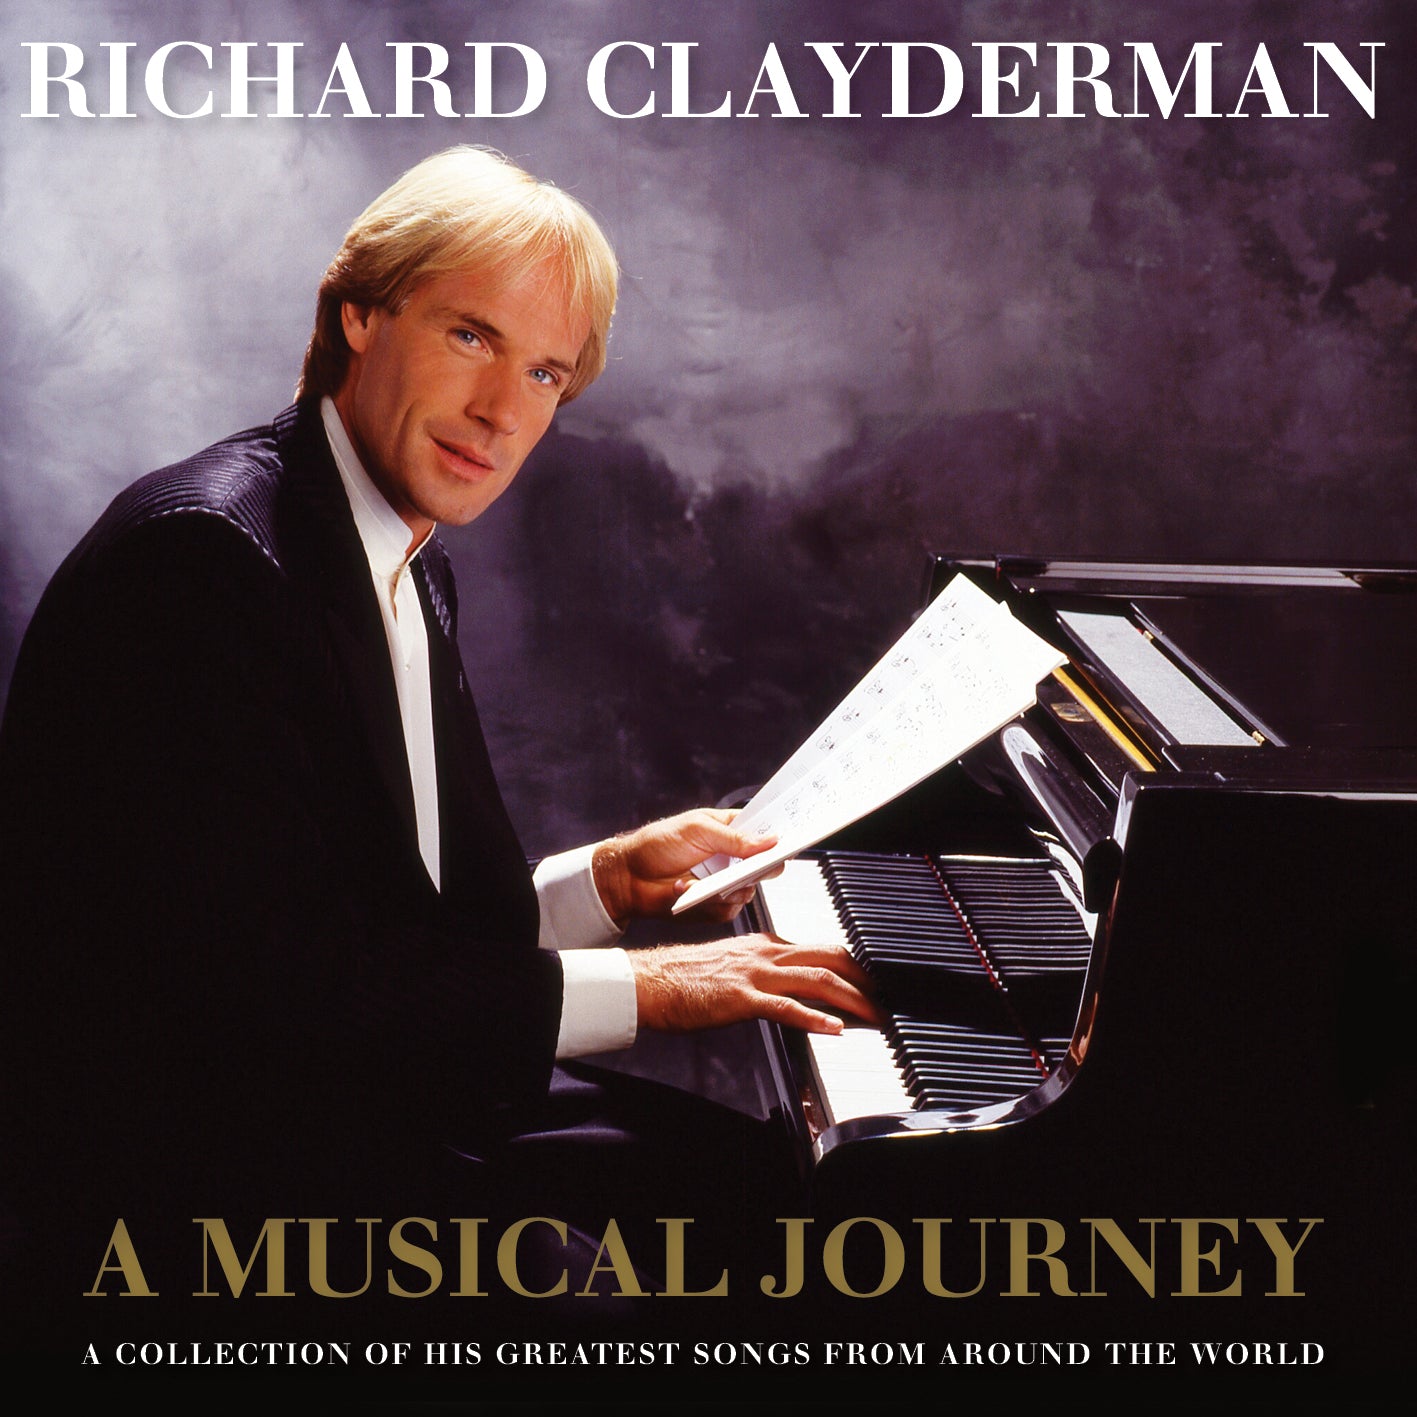 RICHARD CLAYDERMAN - A MUSICAL JOURNEY